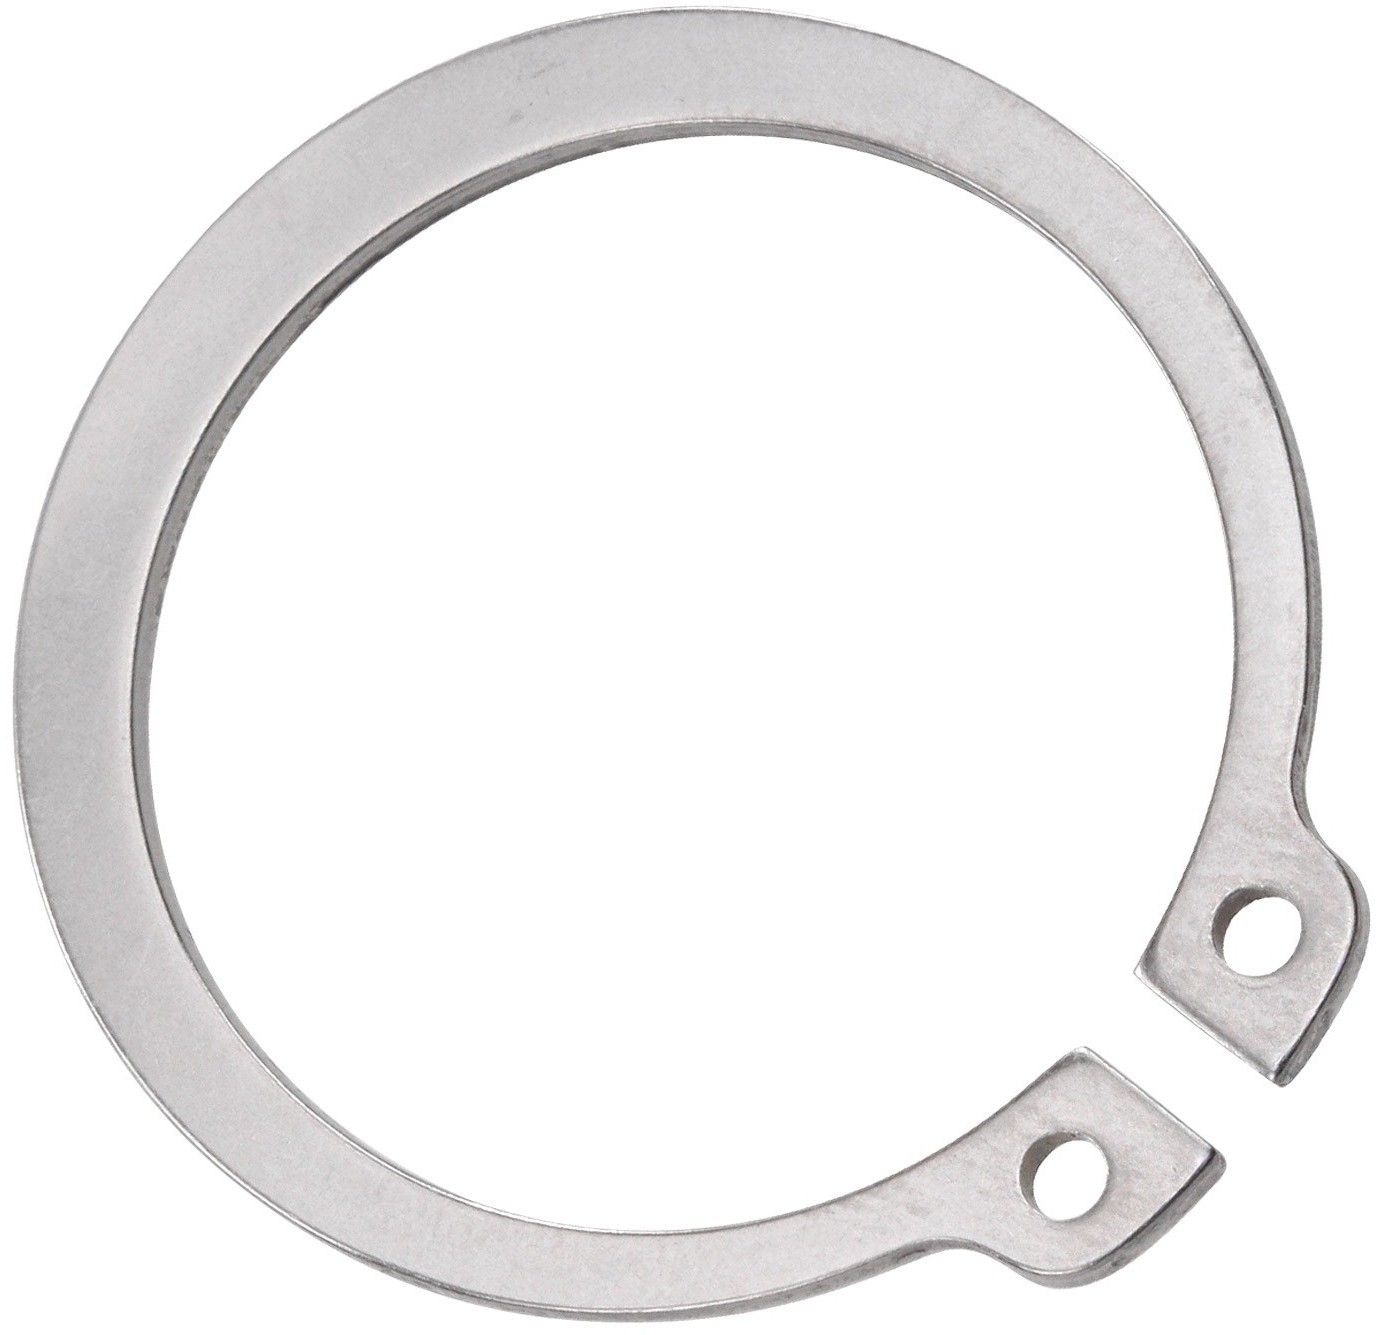 Кольцо стопорное наружное 145х4 DIN 471, нержавеющая сталь 1.4122 (А2) - фото